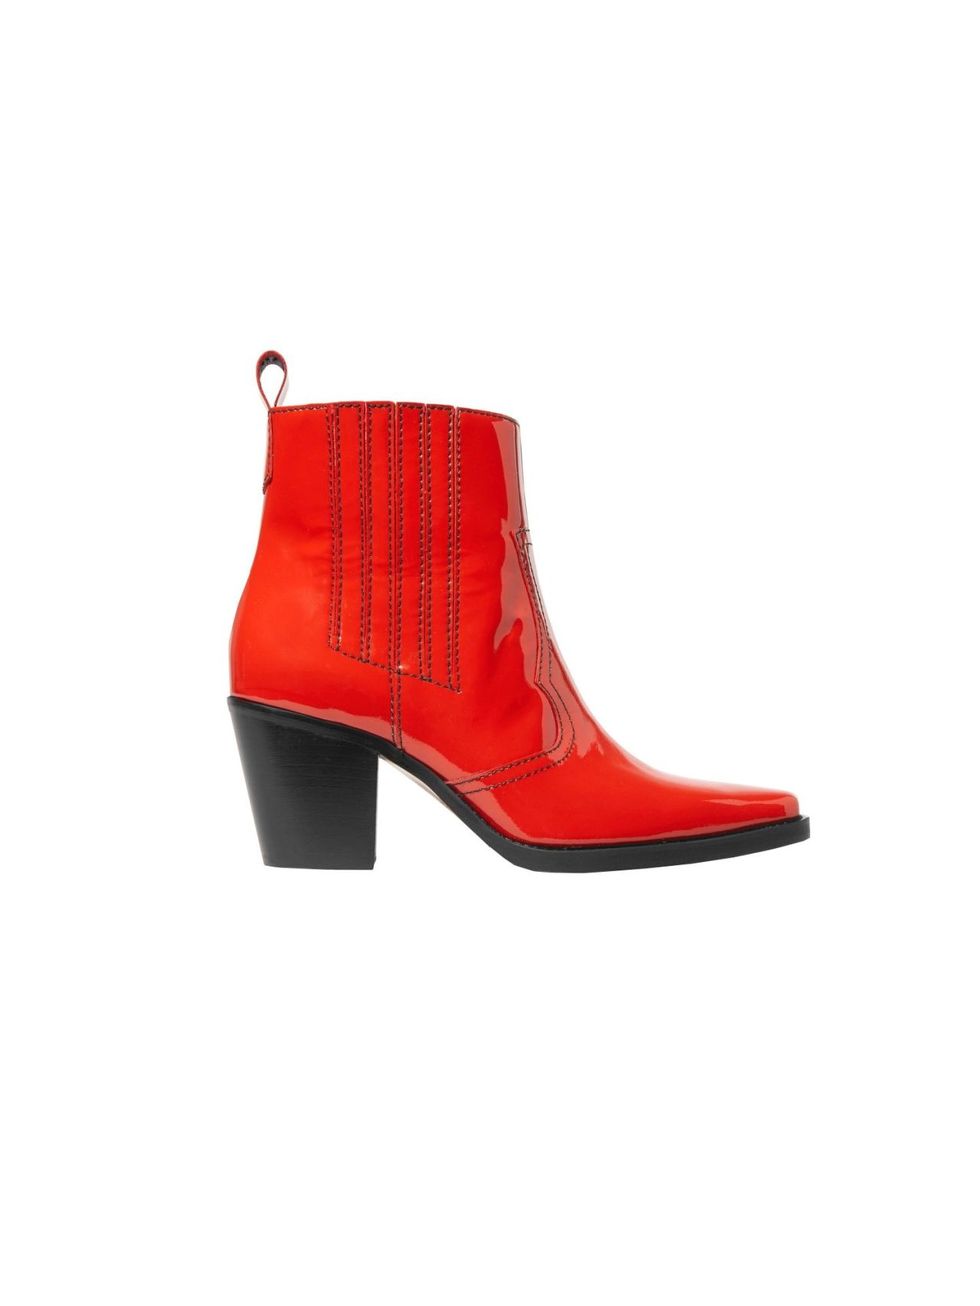 Footwear, Red, Boot, Shoe, High heels, Leather, Zipper, 